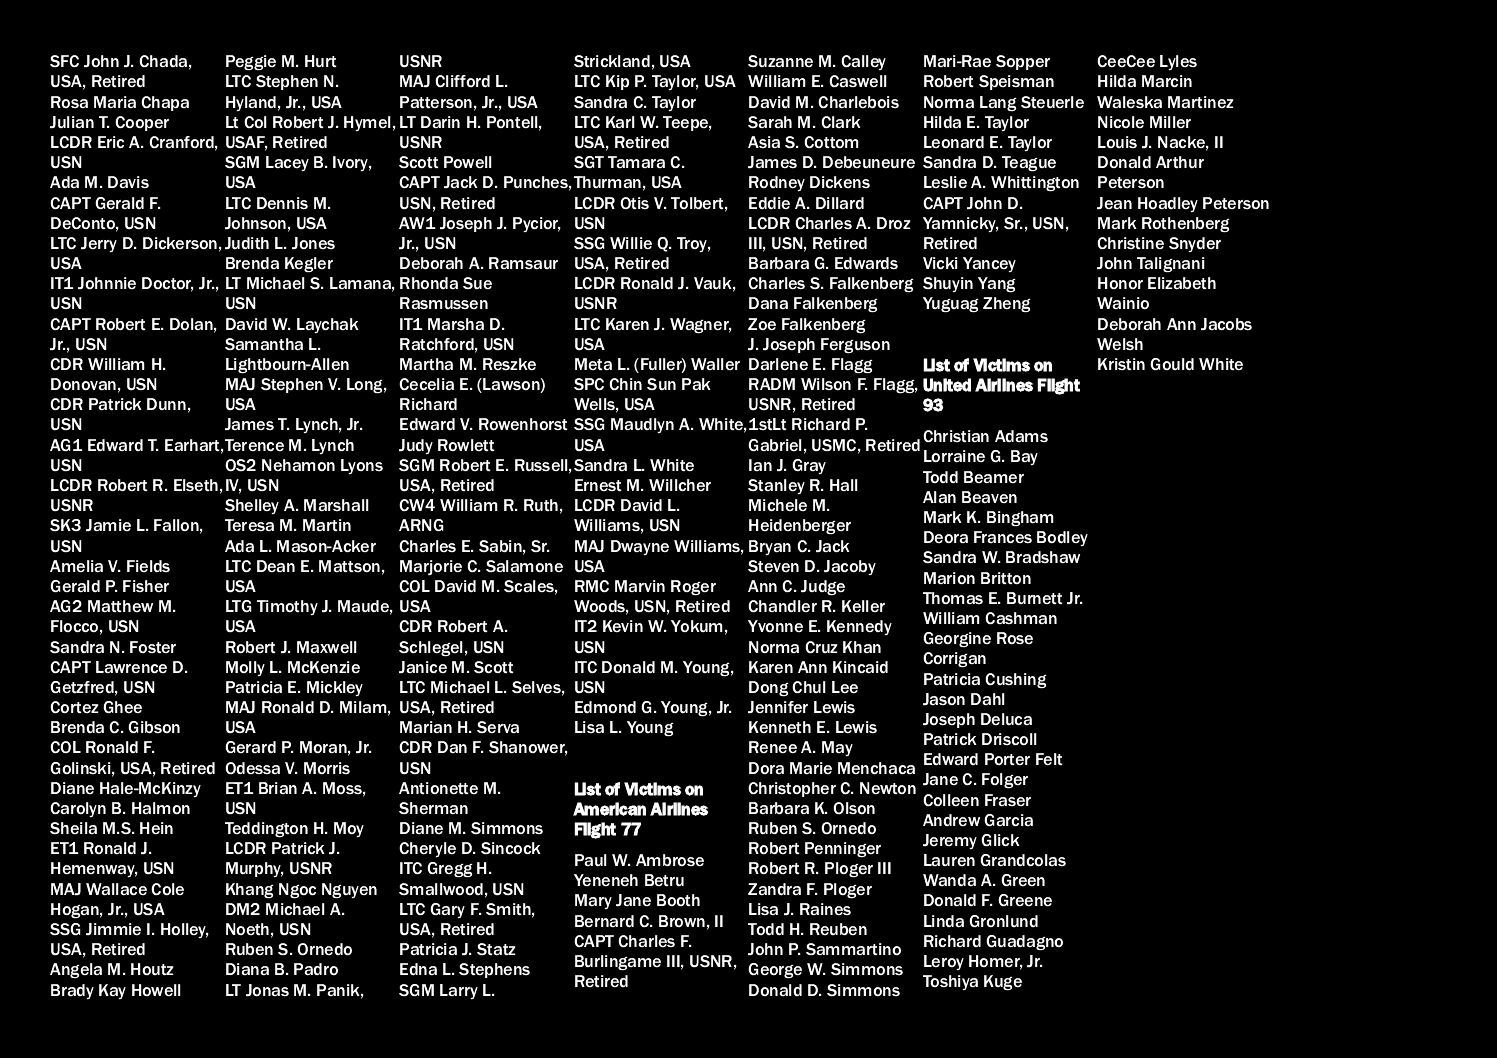 list-victims-11092001-10